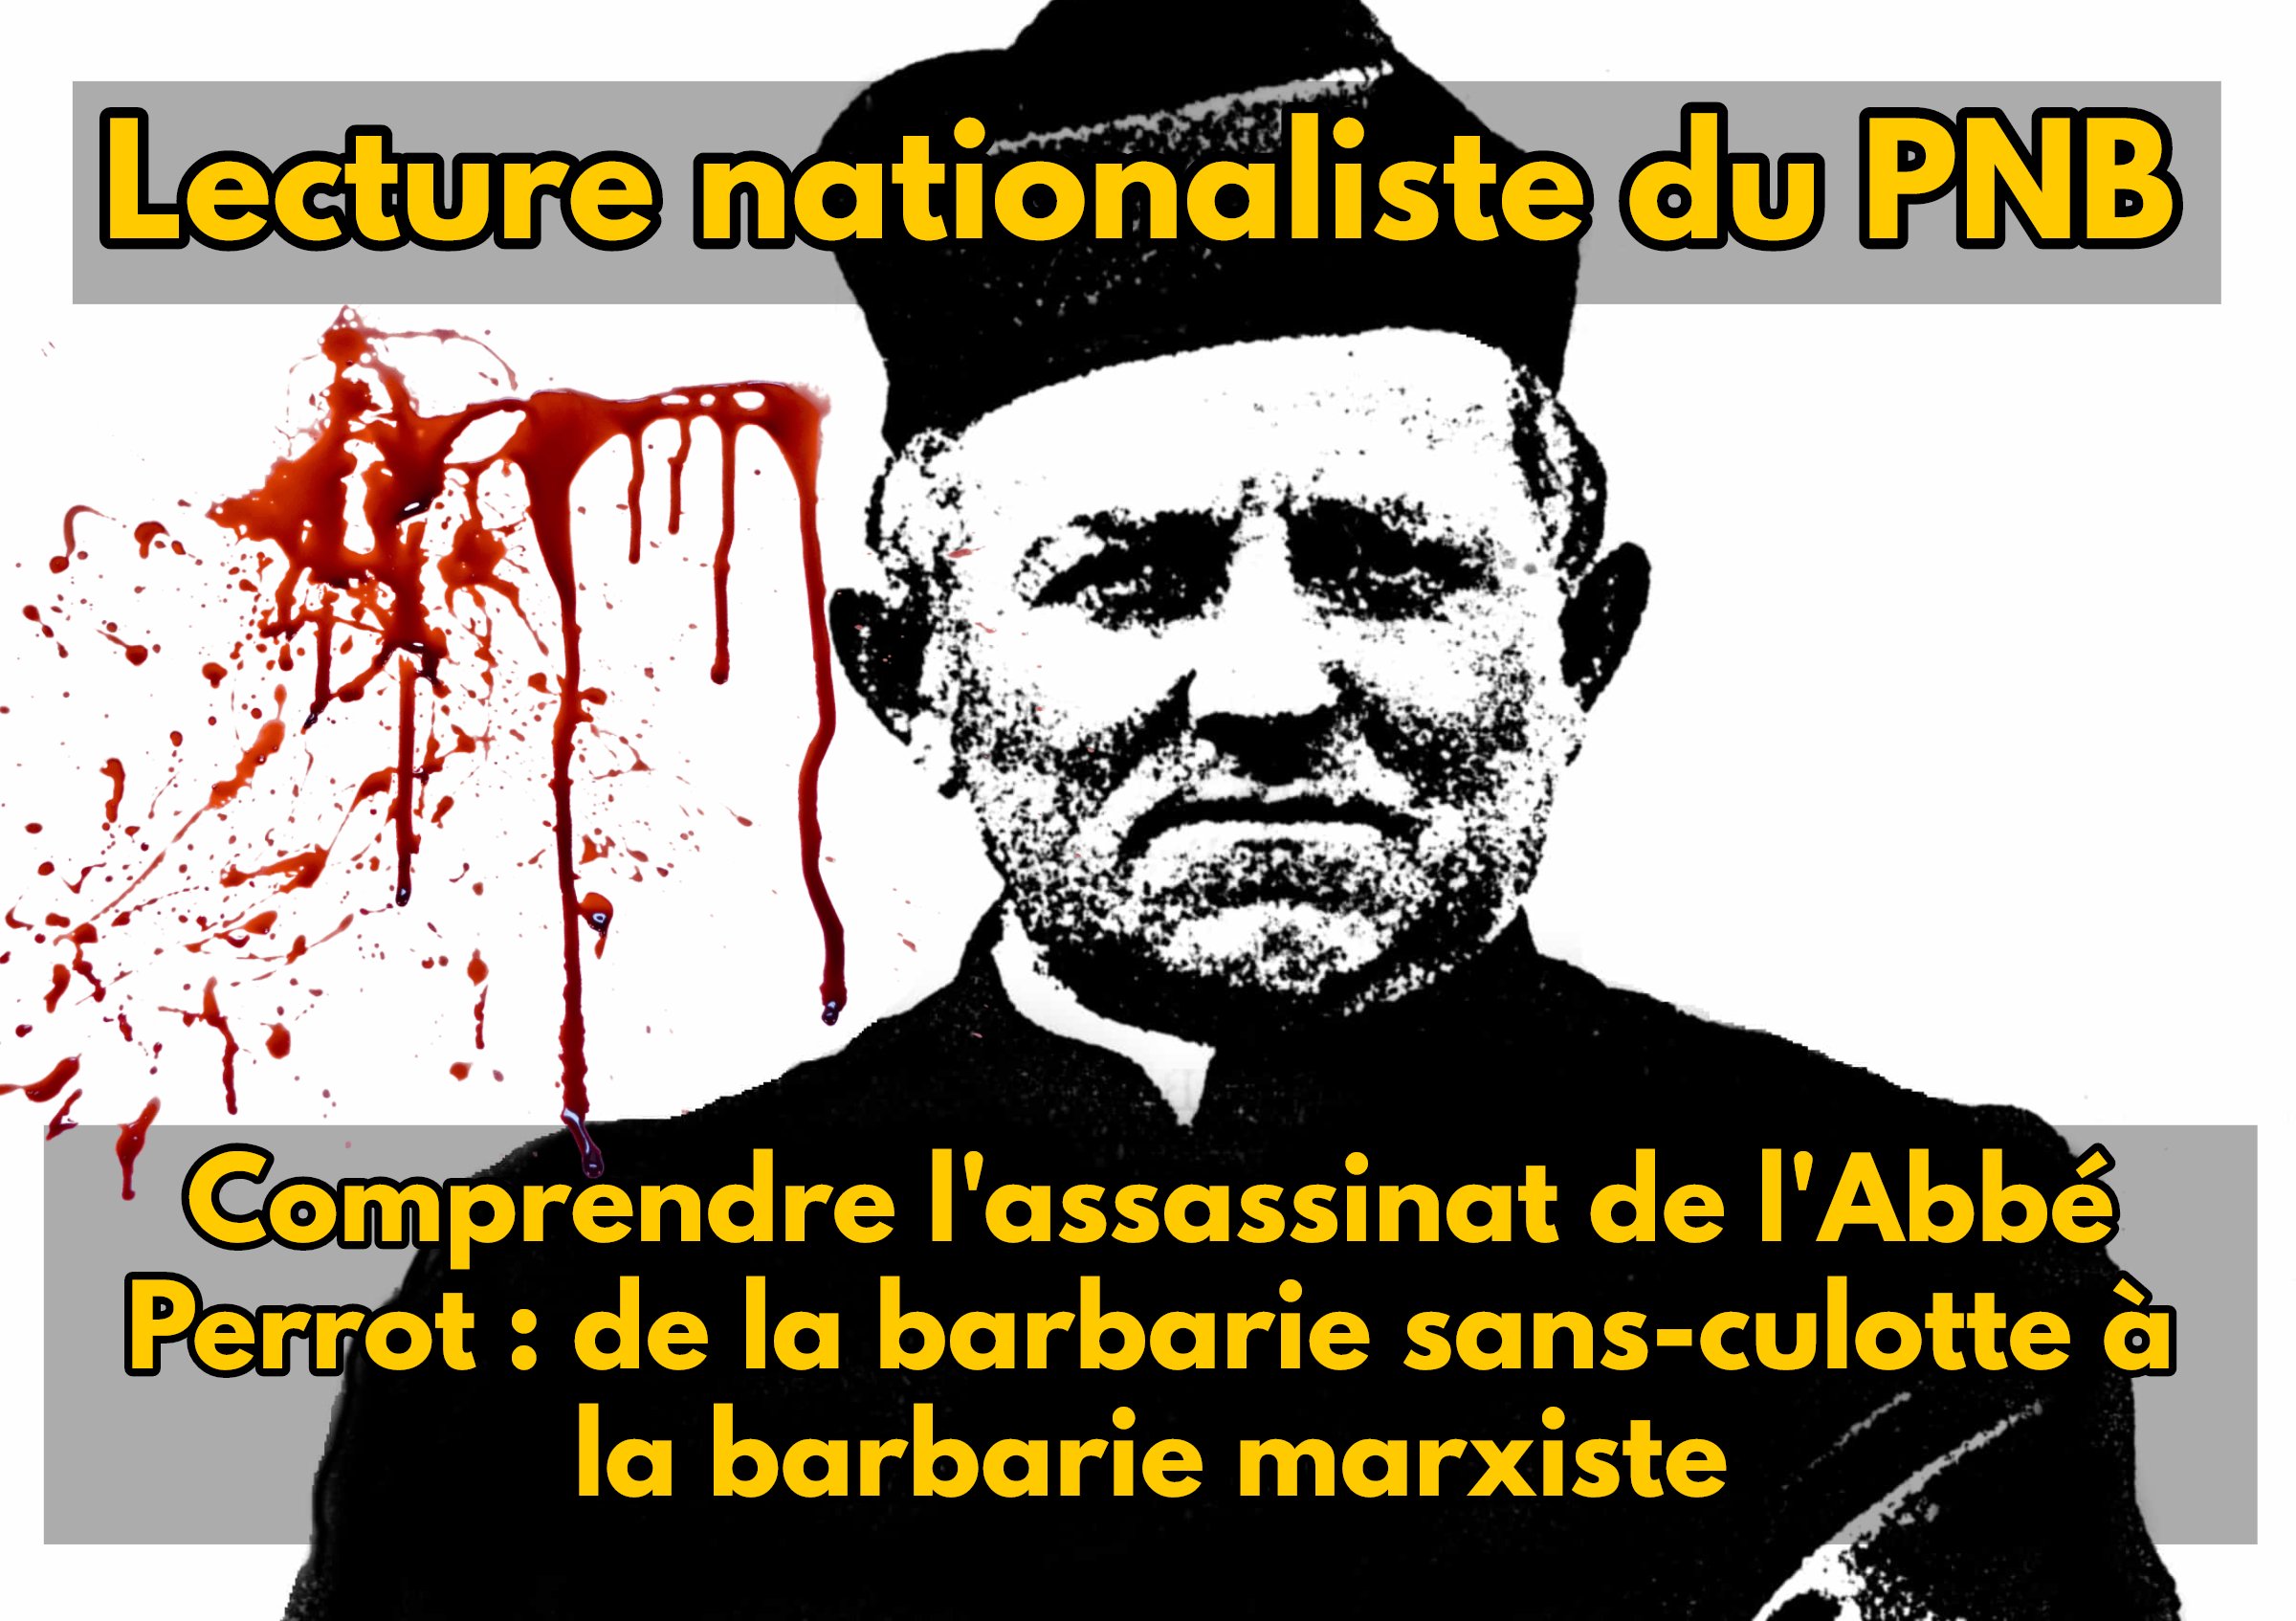 L’assassinat de l’Abbé Perrot : de la barbarie sans-culotte à la barbarie marxiste